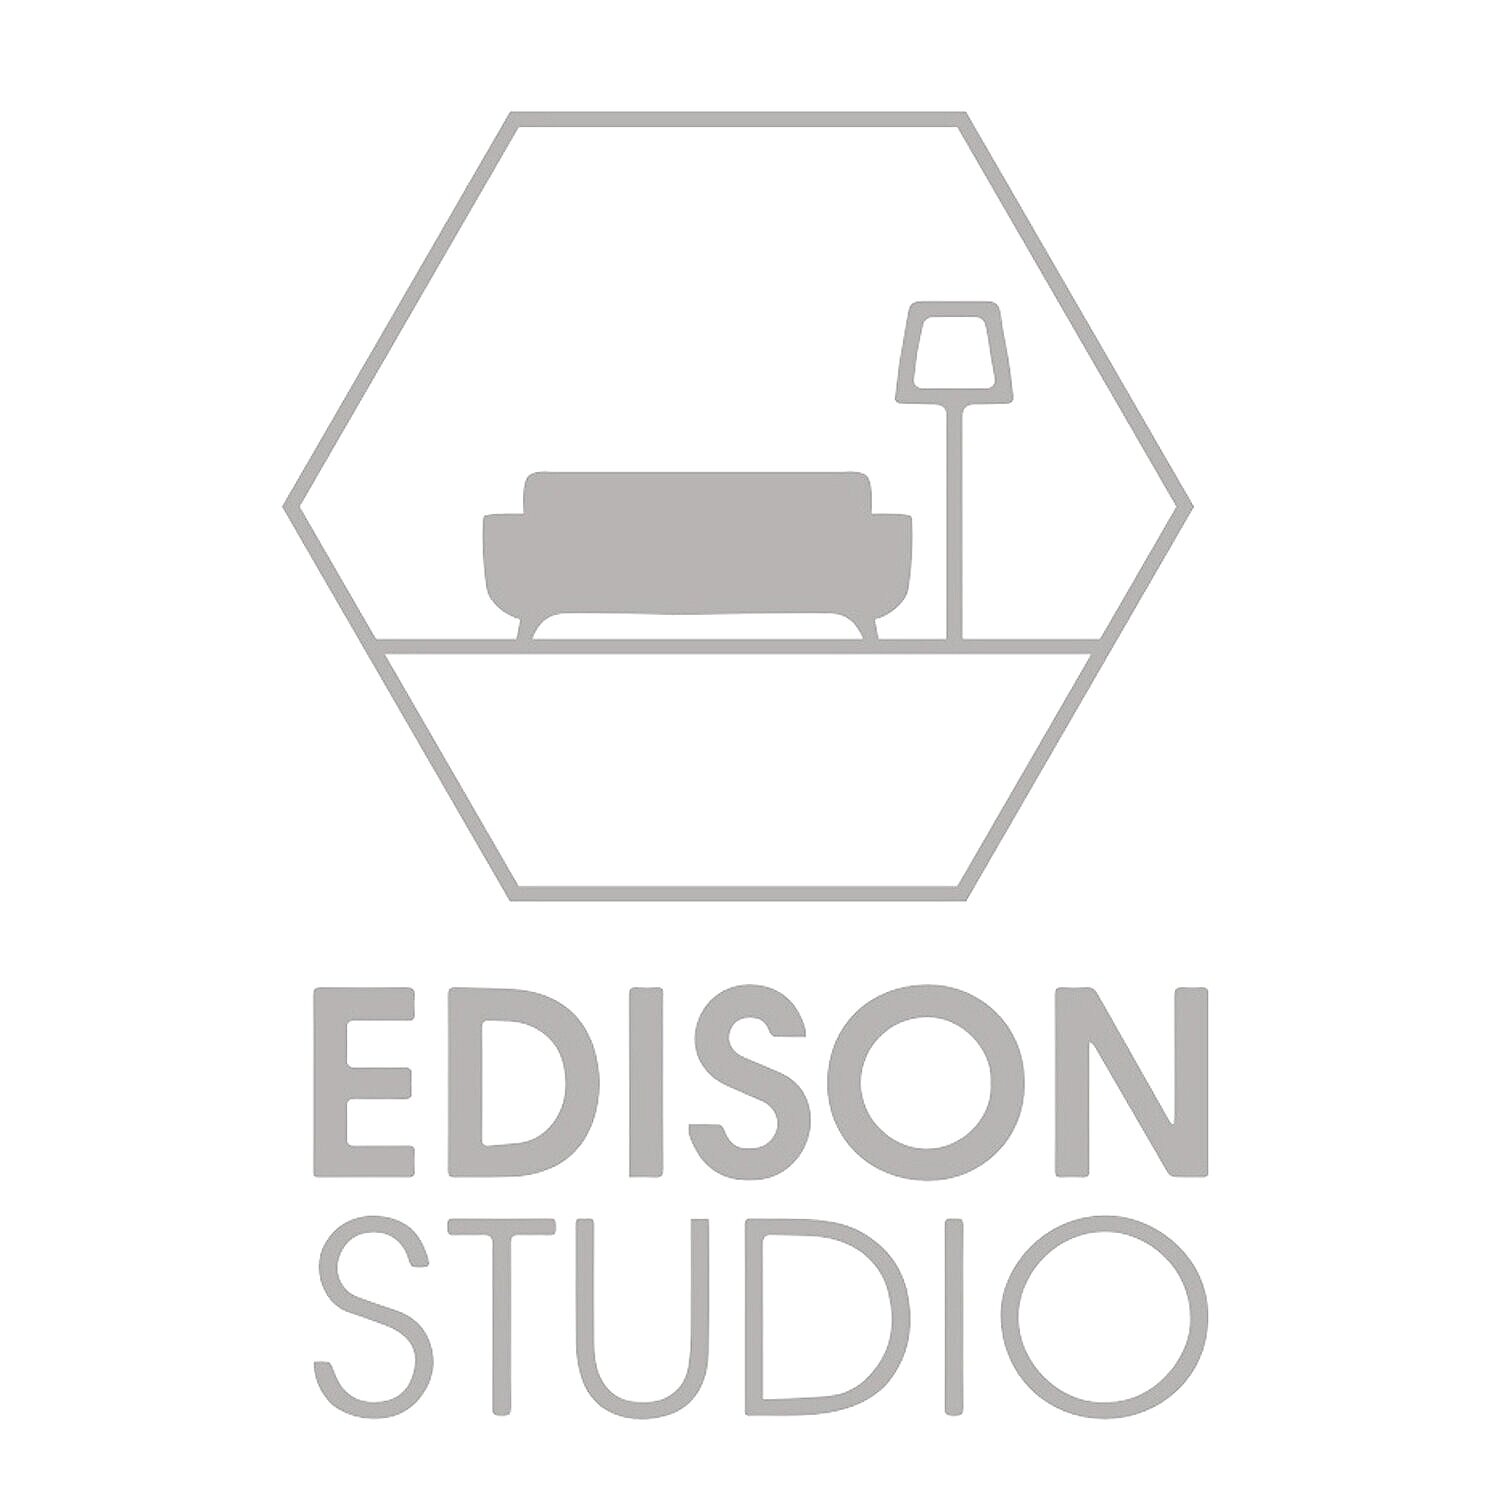 EDISON STUDIO